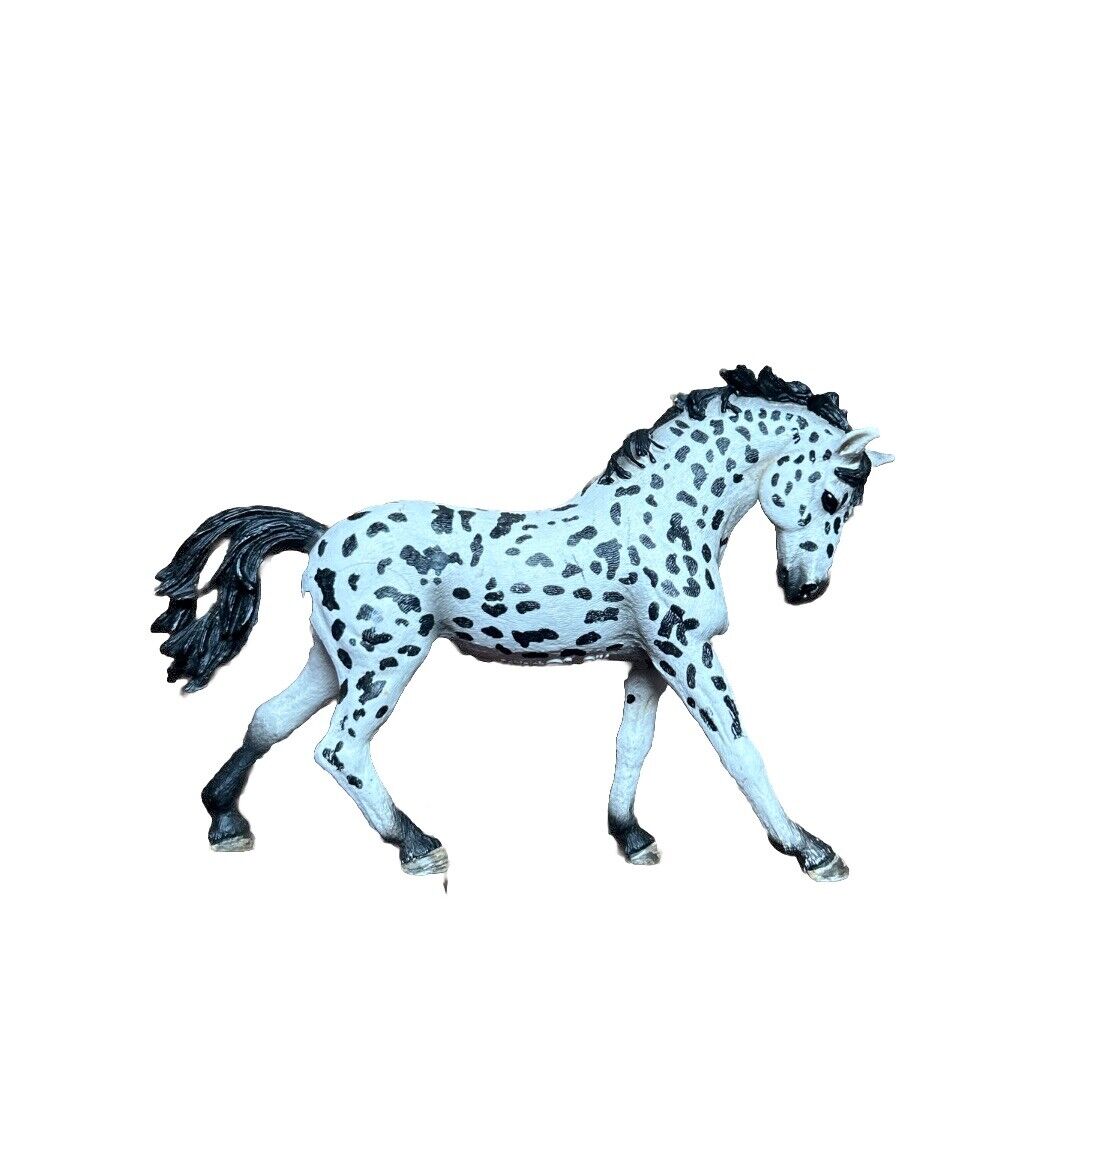 Retired Schleich Safari Horse #13769 Knabstrupper Leopard Appaloosa Mare 2014